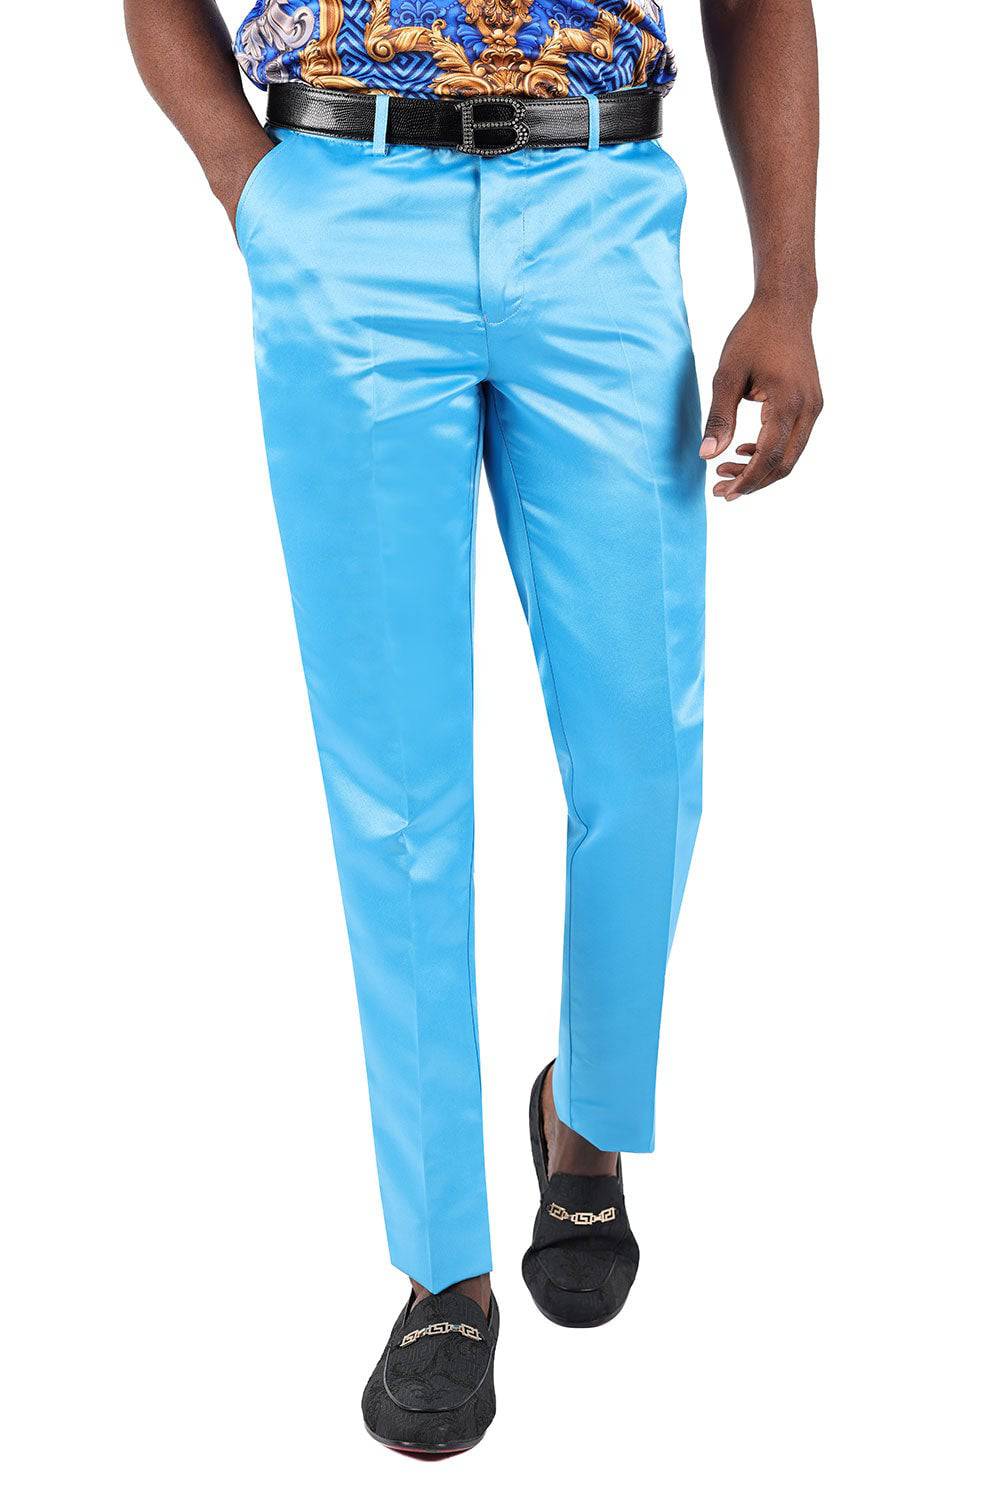 BARABAS Men's Solid Color Plain Shiny Chino Dress Pants 3CP02 Blue